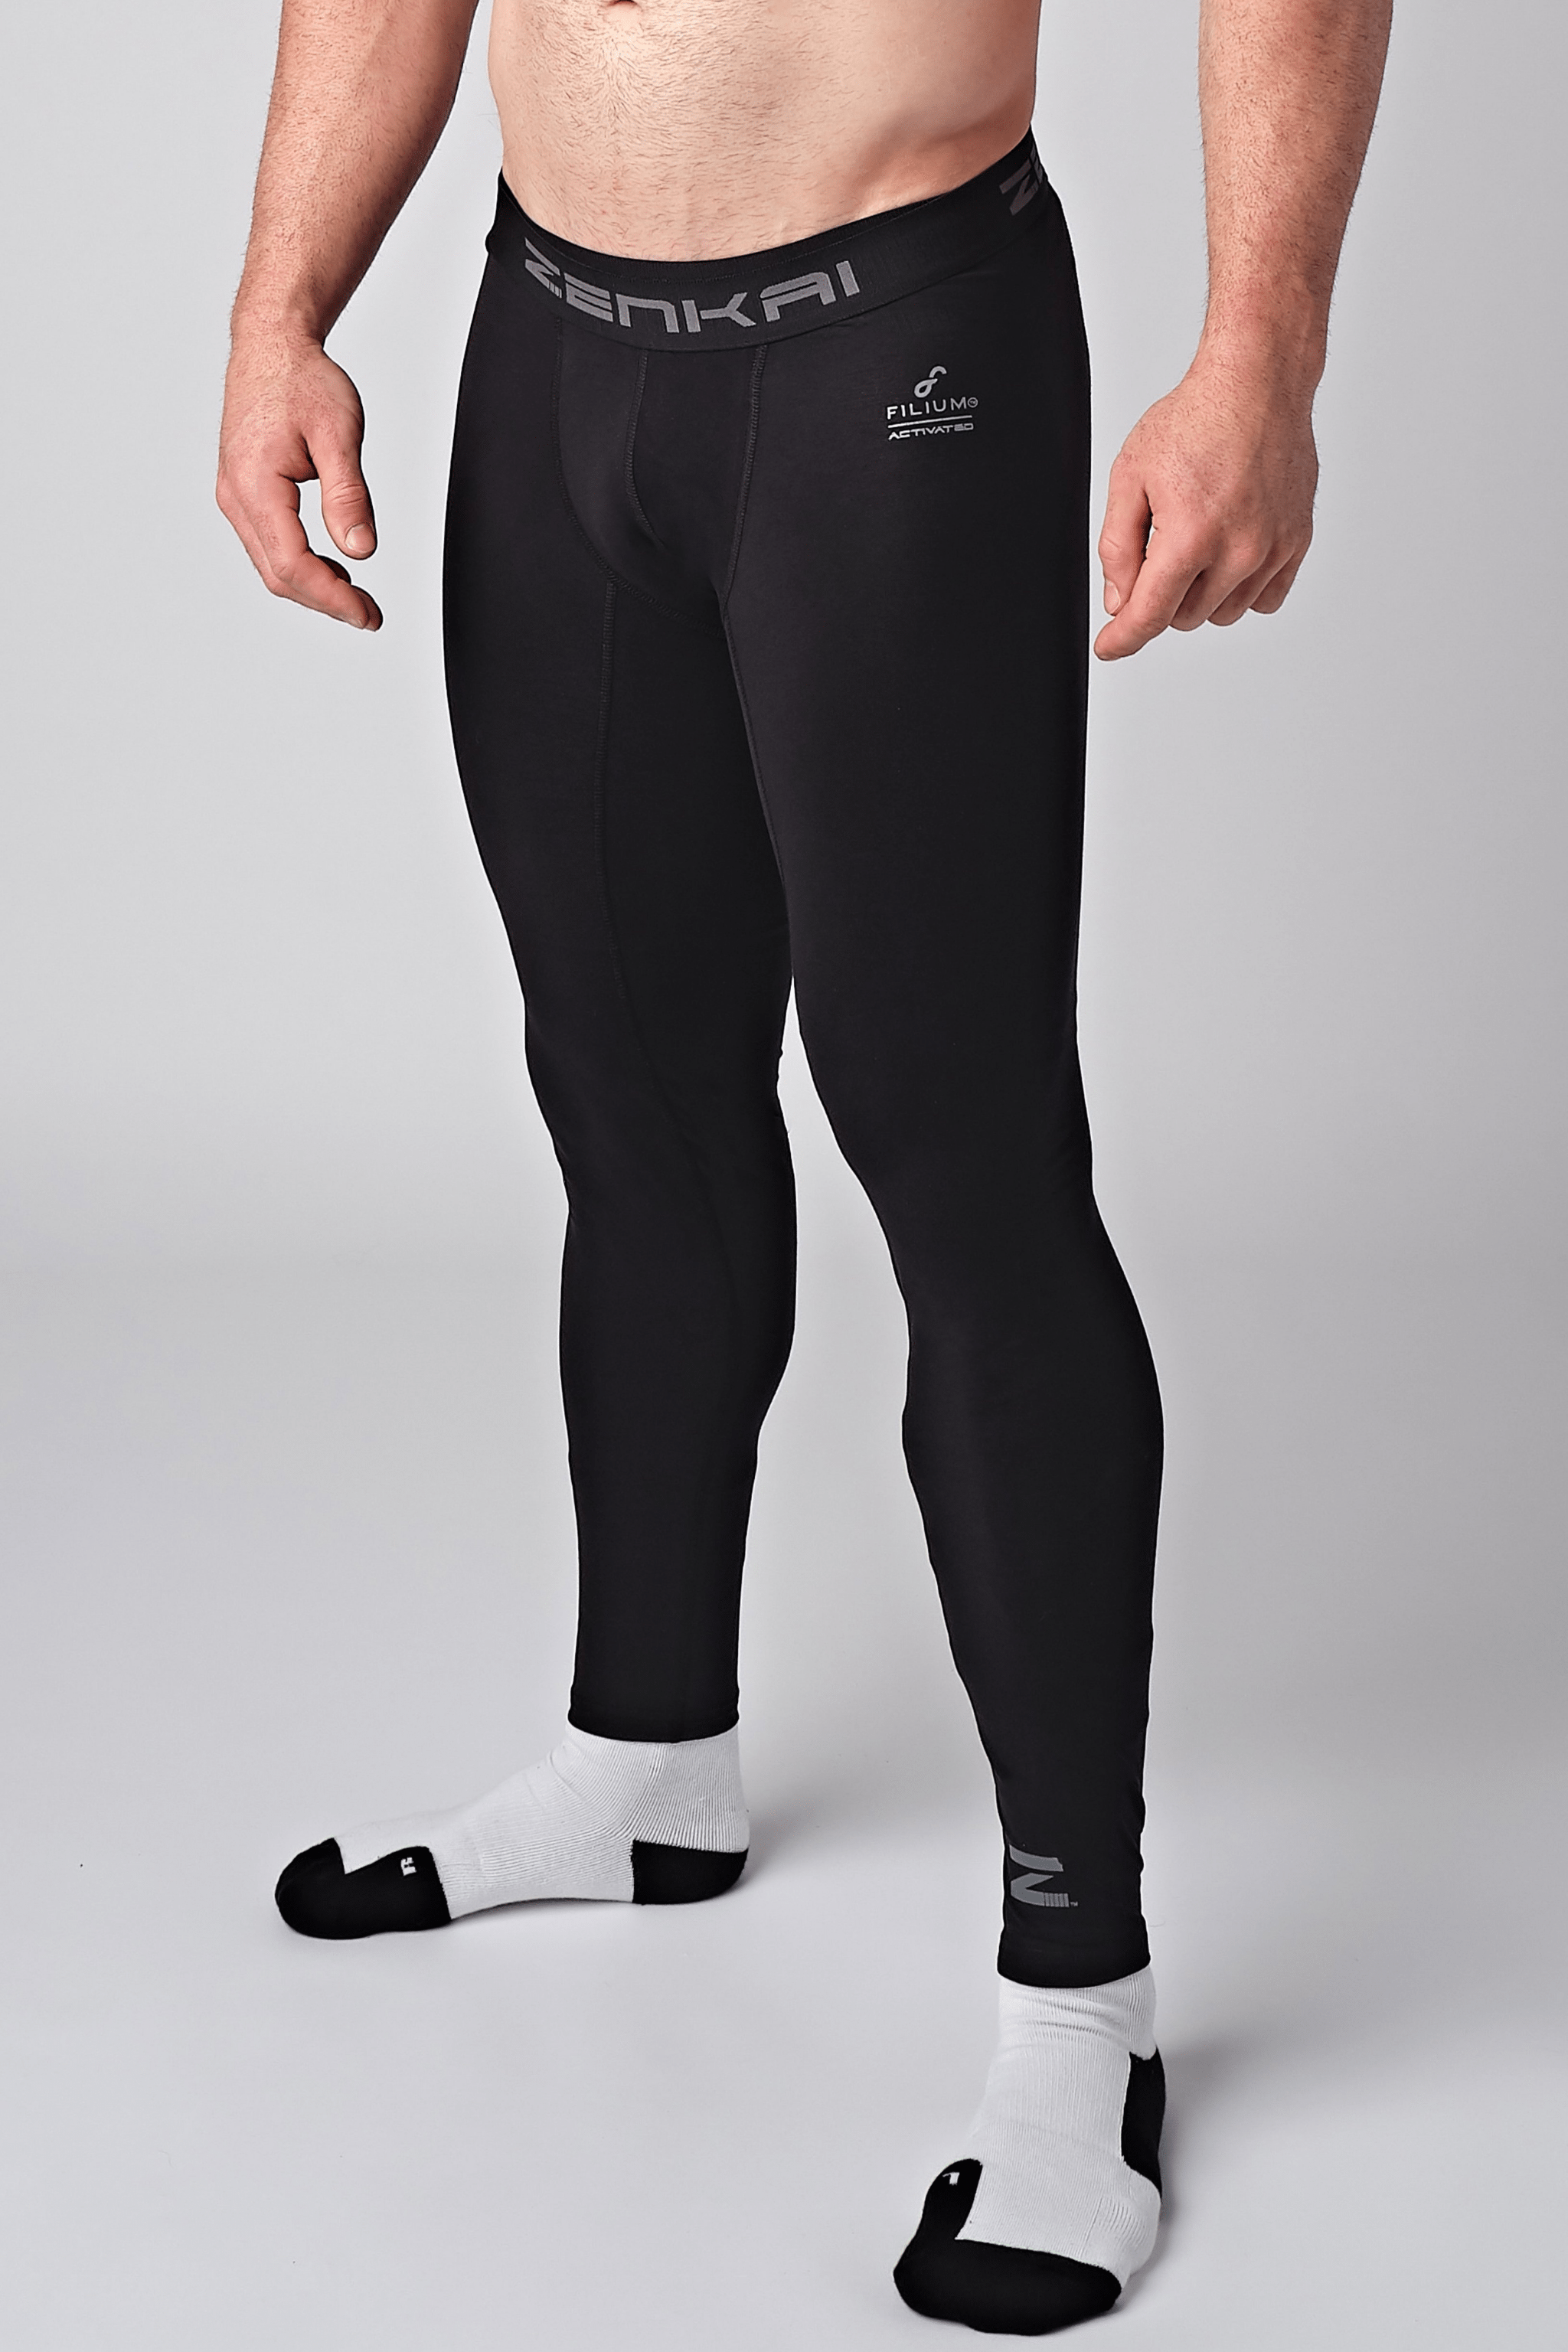 MRX Men's Compression Trouser Pant Base Layer Active Wear Black/Gray – MRX  Products